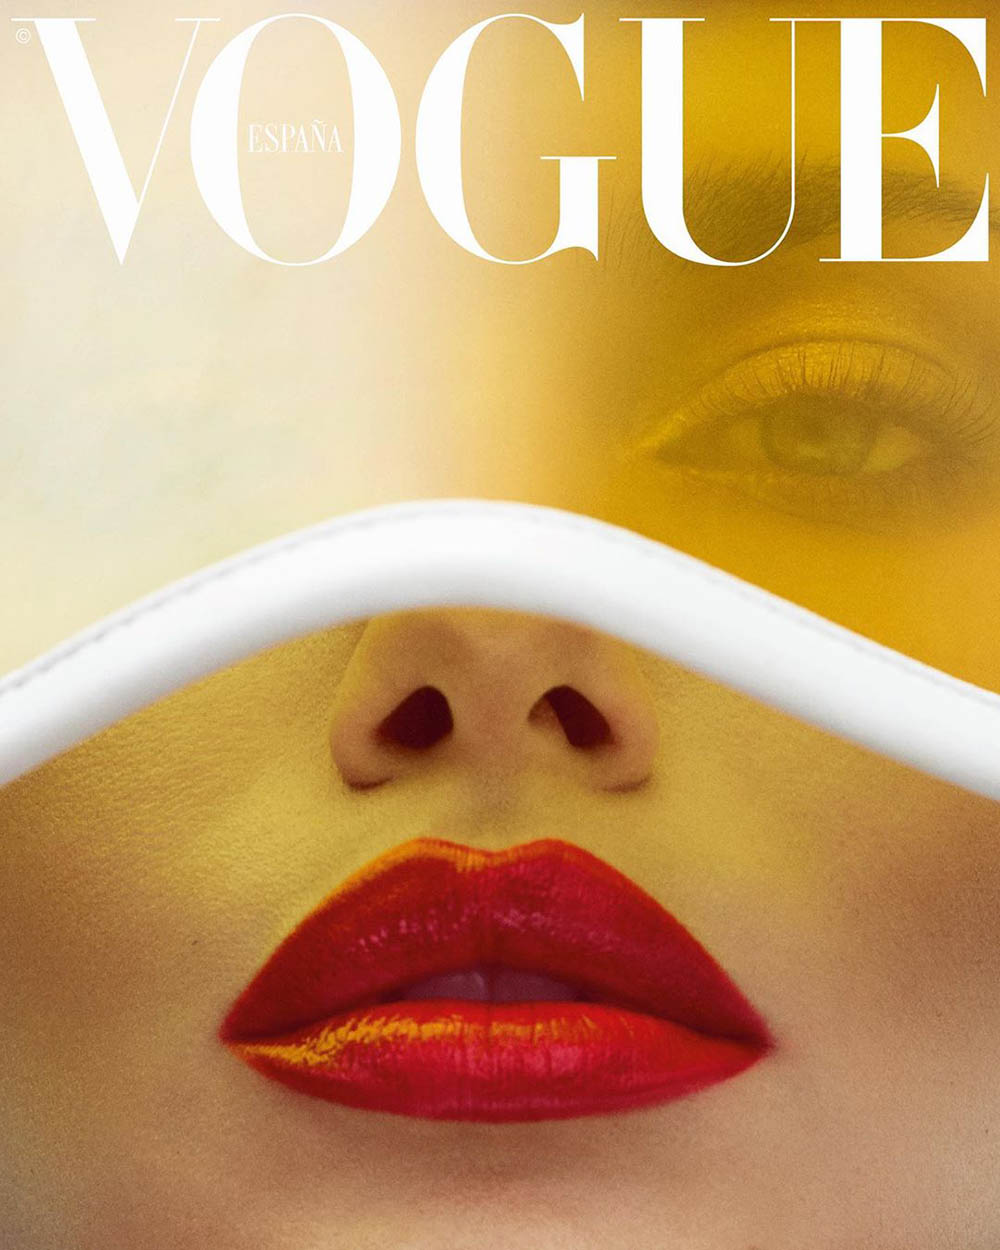 Adriana Lima and Irina Shayk cover Vogue Spain August 2019 by Luigi & Iango